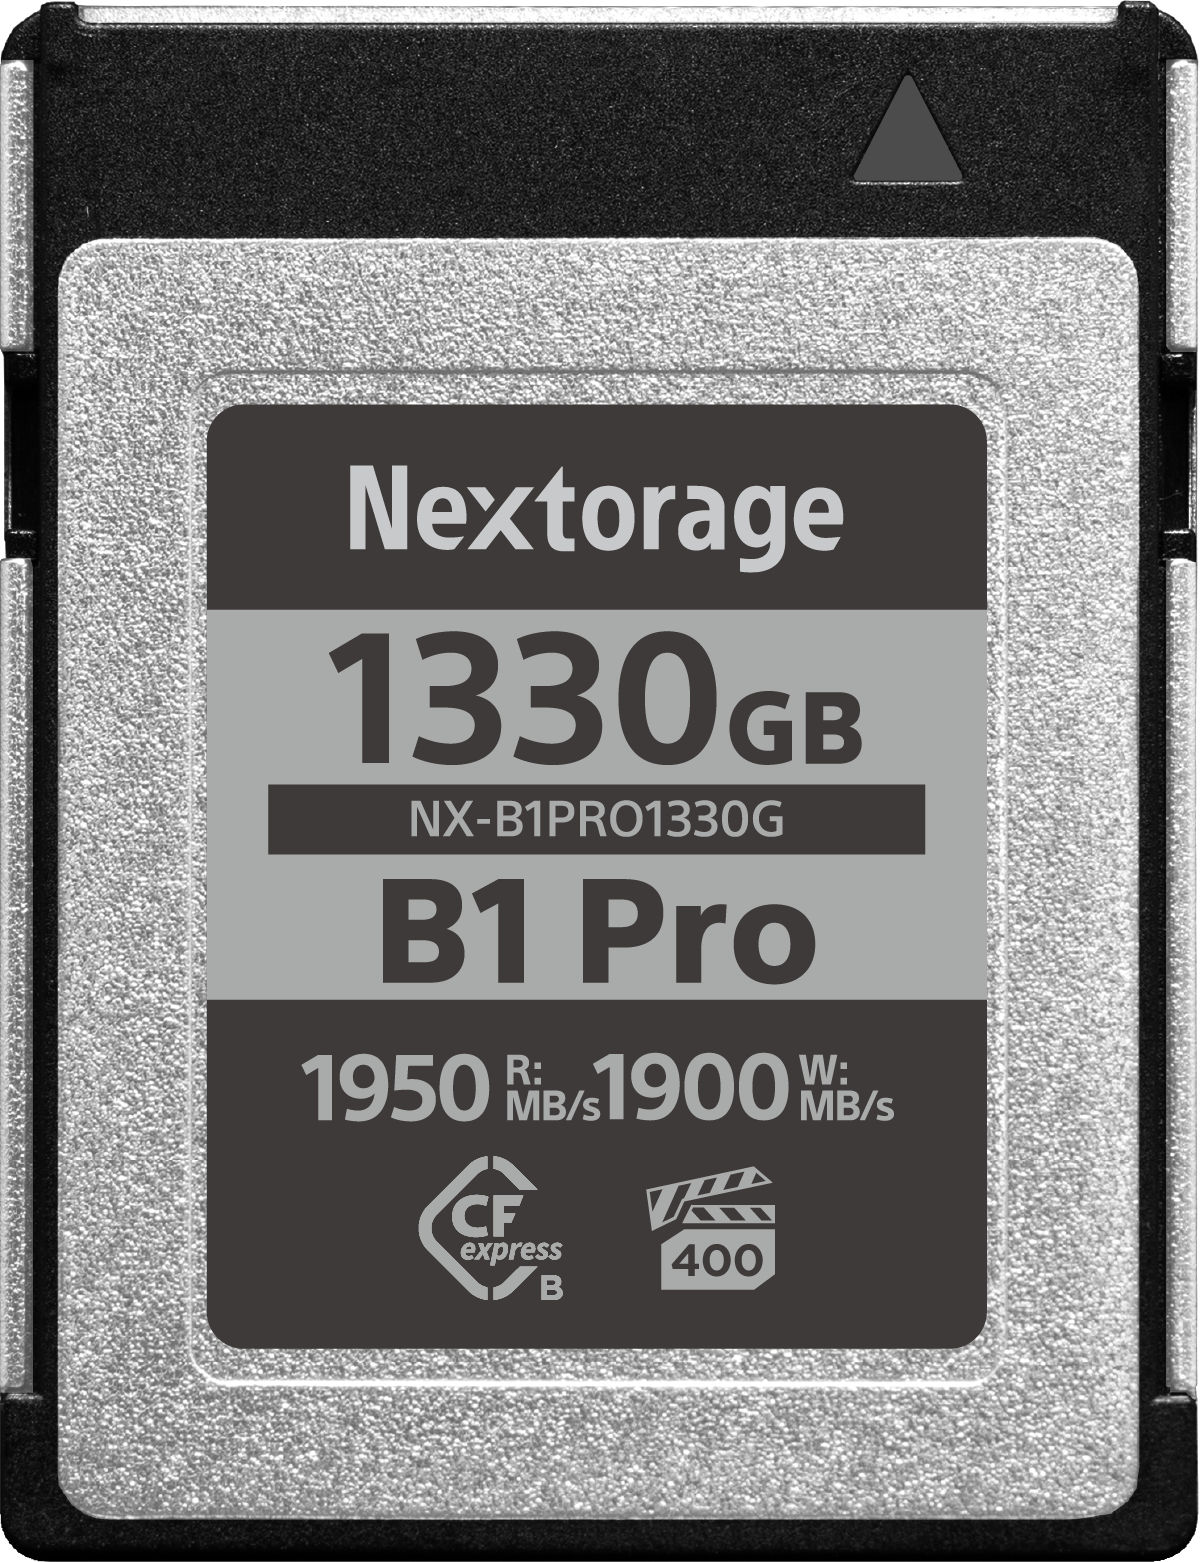 Nextorage Announces World's Fastest[1] CFexpress™ Type B Memory